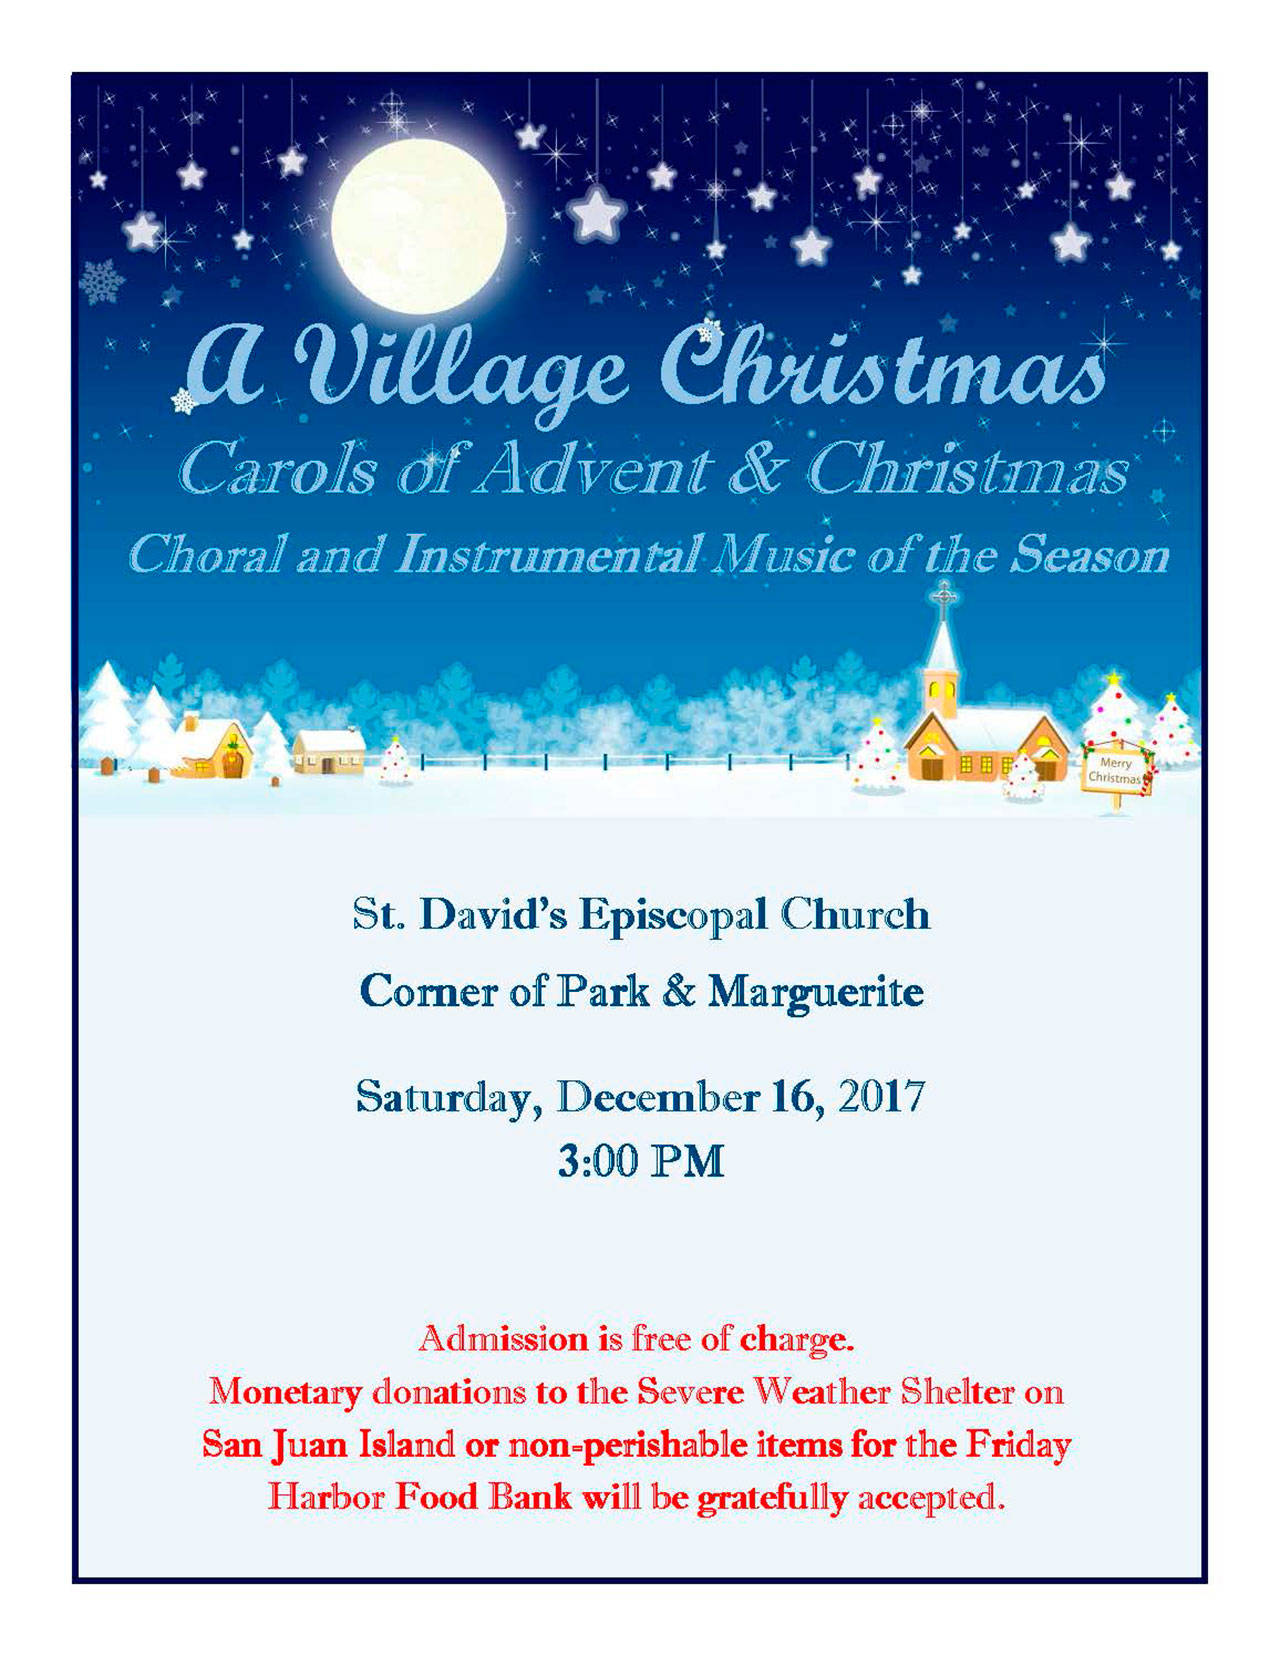 Christmas concert at St. David’s Episcopal Church